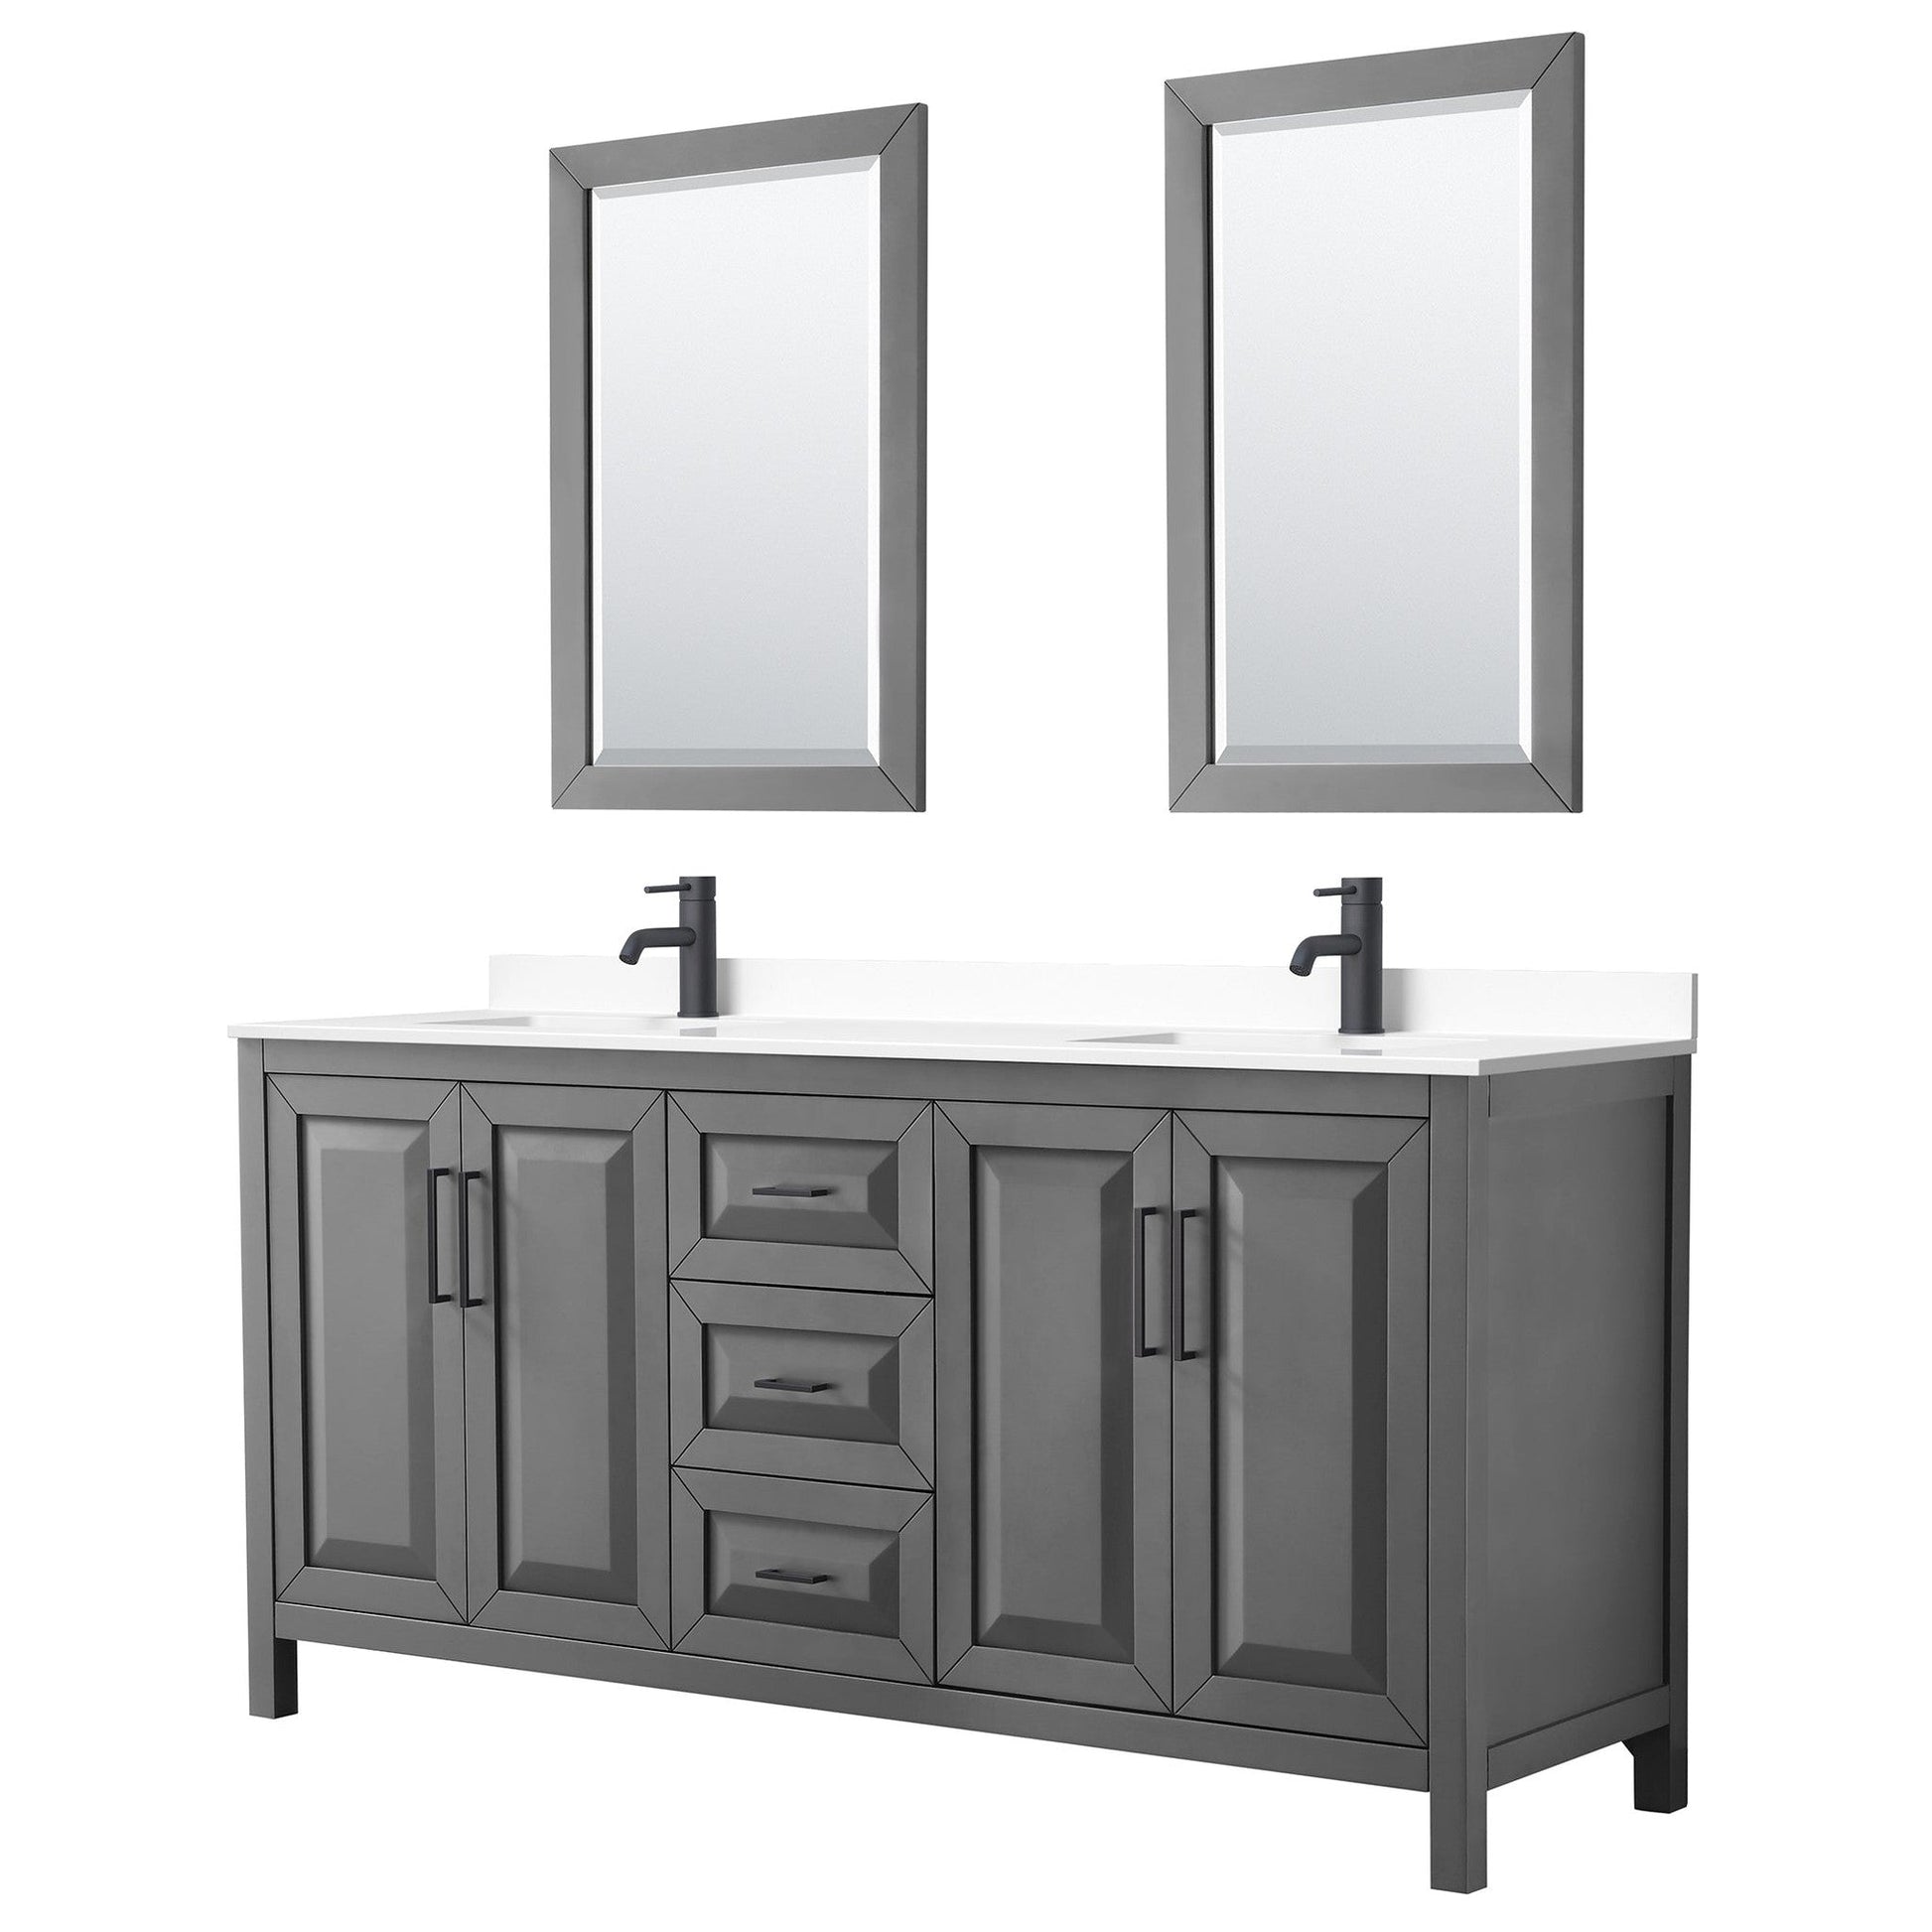 Daria 72" Double Bathroom Vanity in Dark Gray, White Cultured Marble Countertop, Undermount Square Sinks, Matte Black Trim, 24" Mirrors